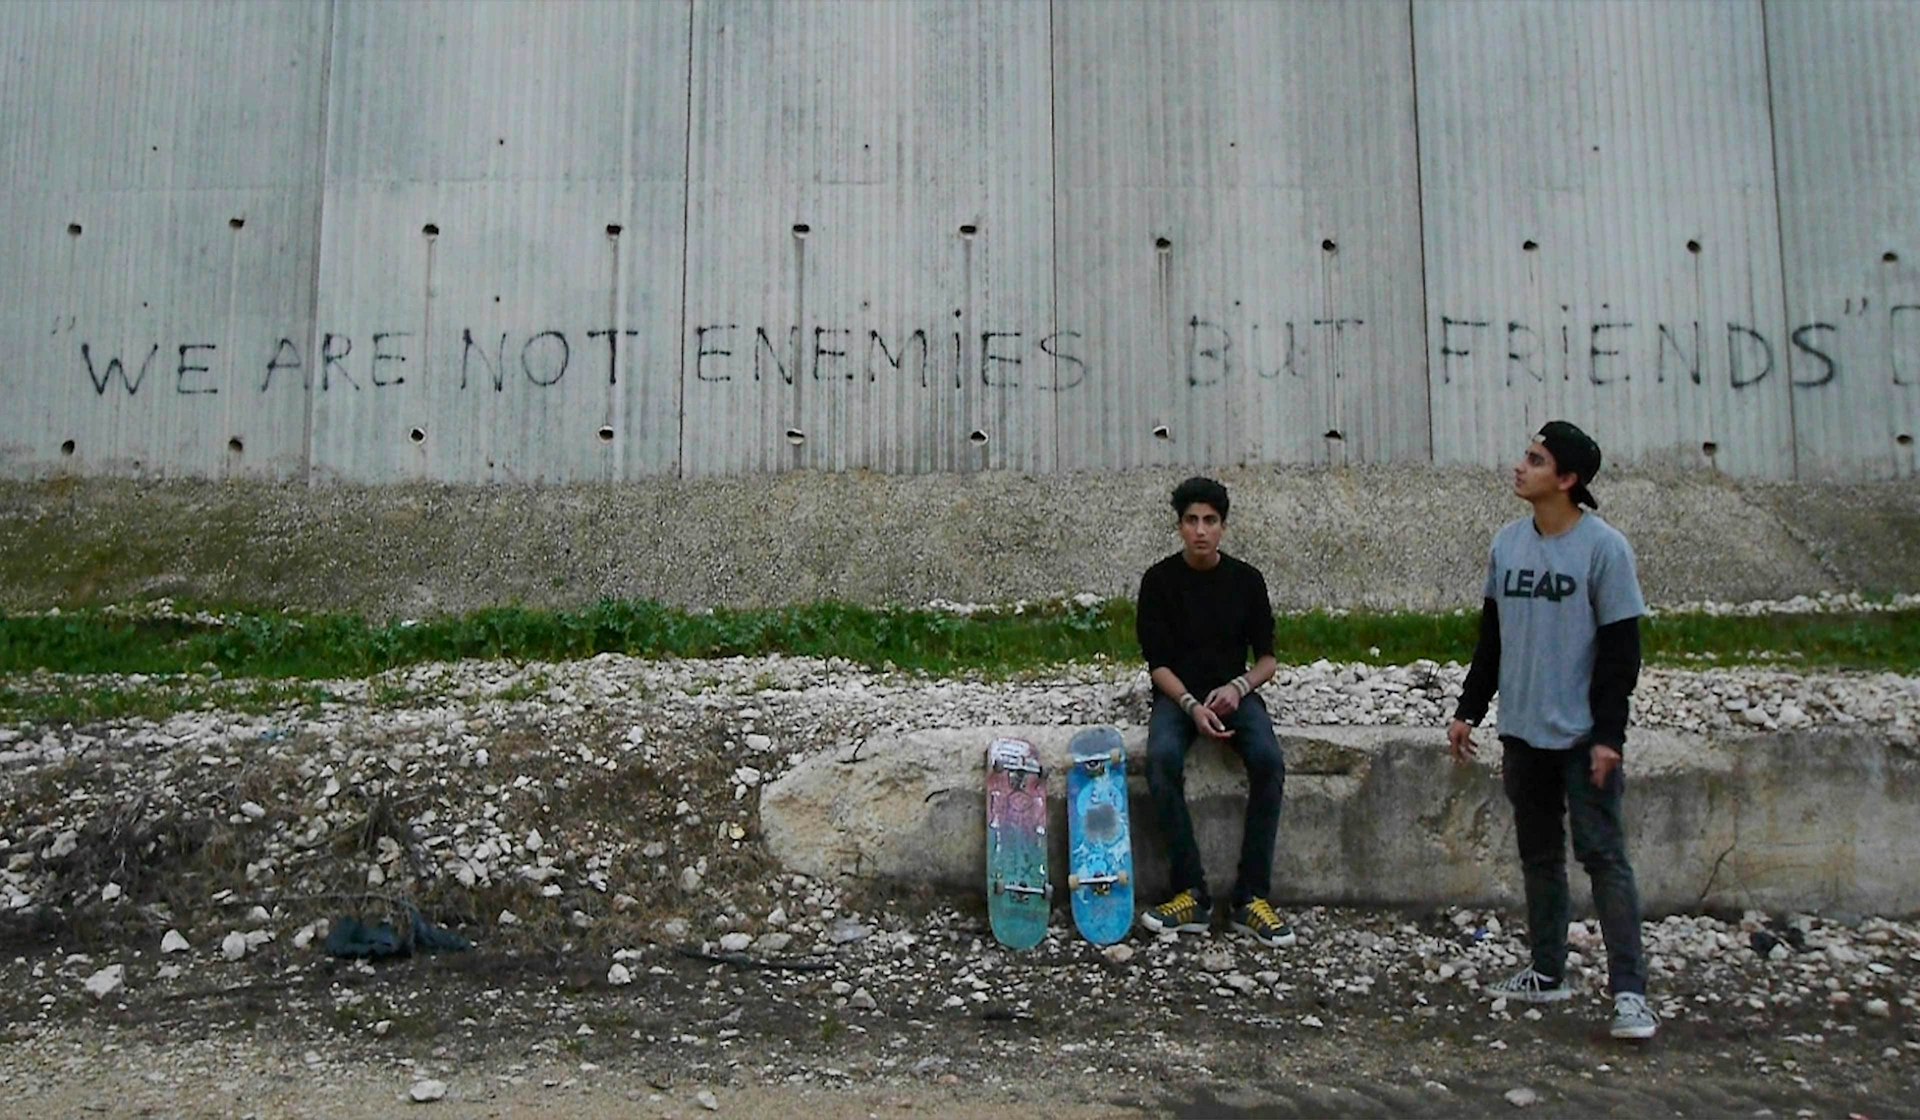 A thriving skateboarding scene is emerging in Palestine